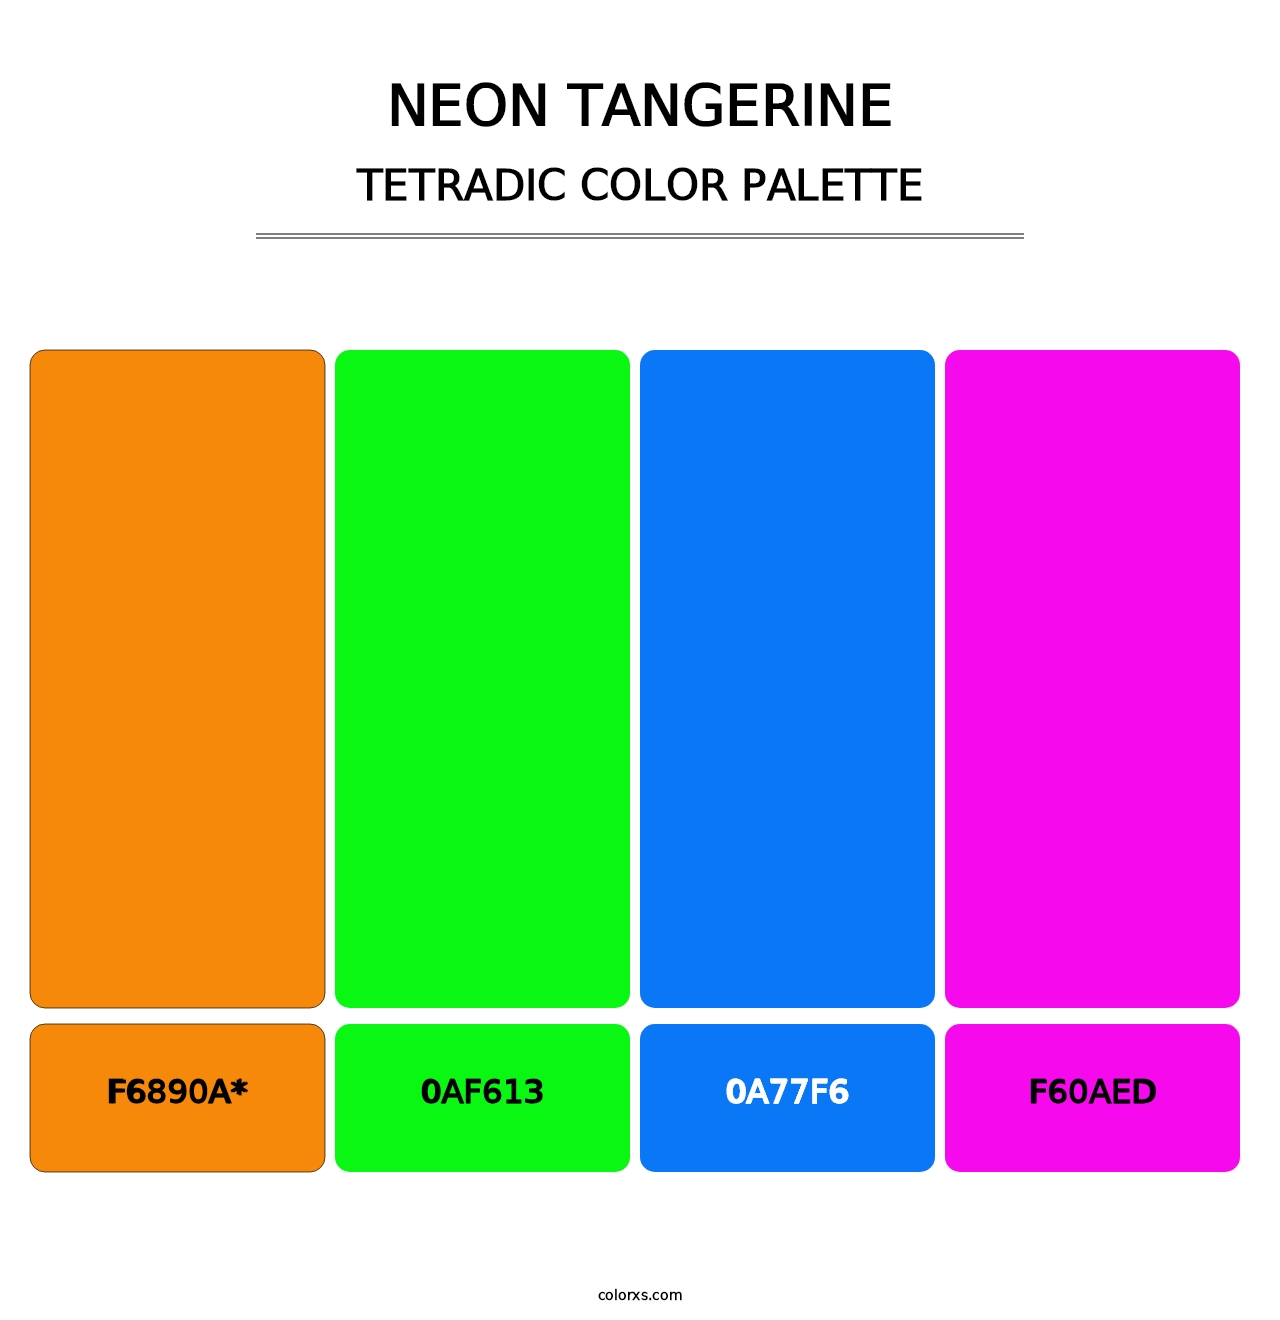 Neon Tangerine - Tetradic Color Palette